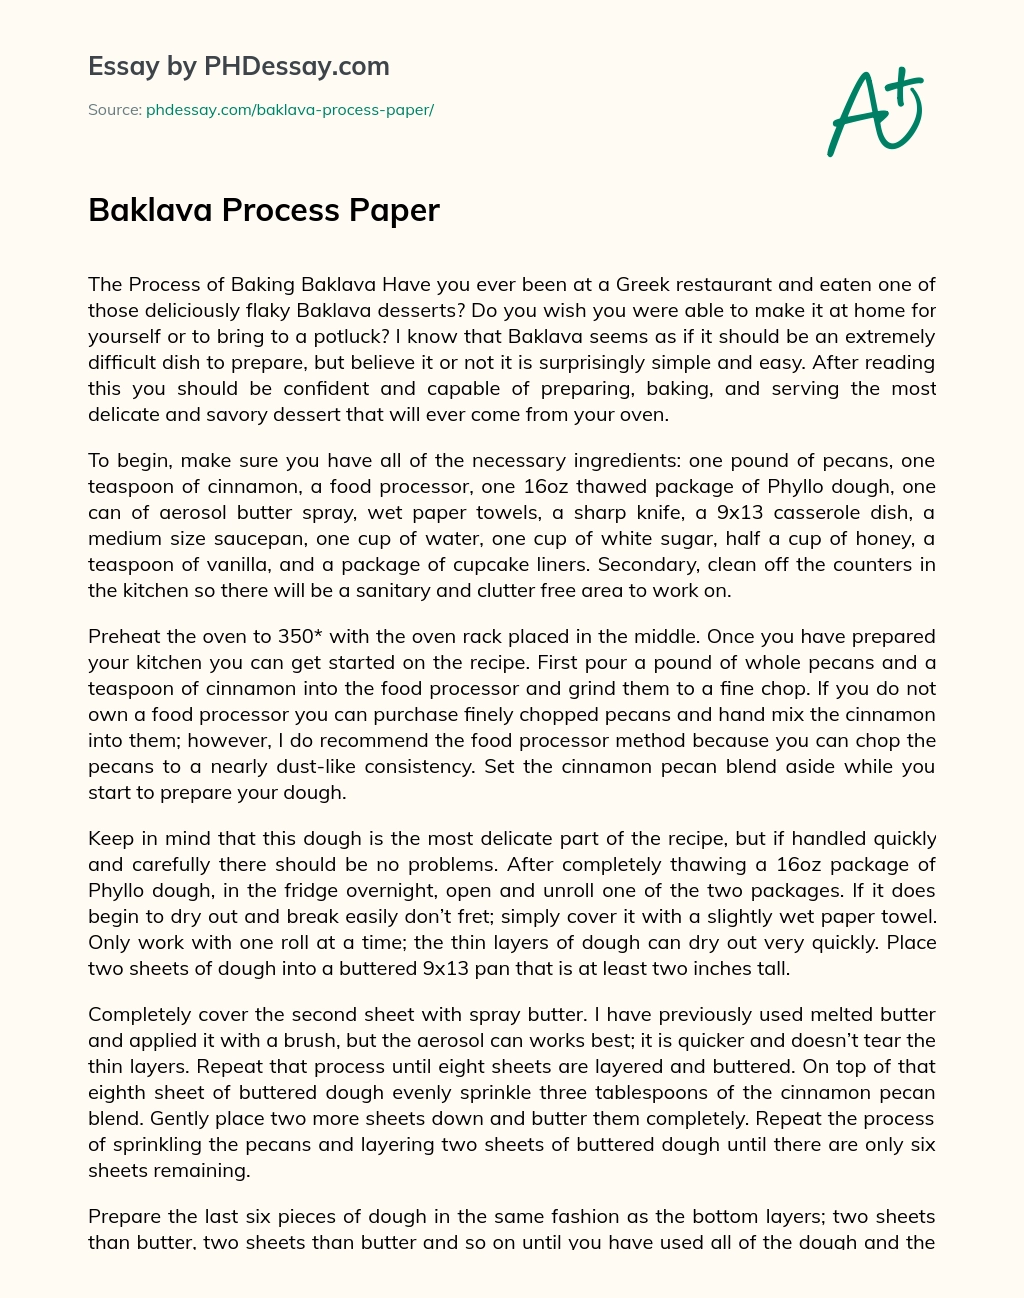 Baklava Process Paper essay